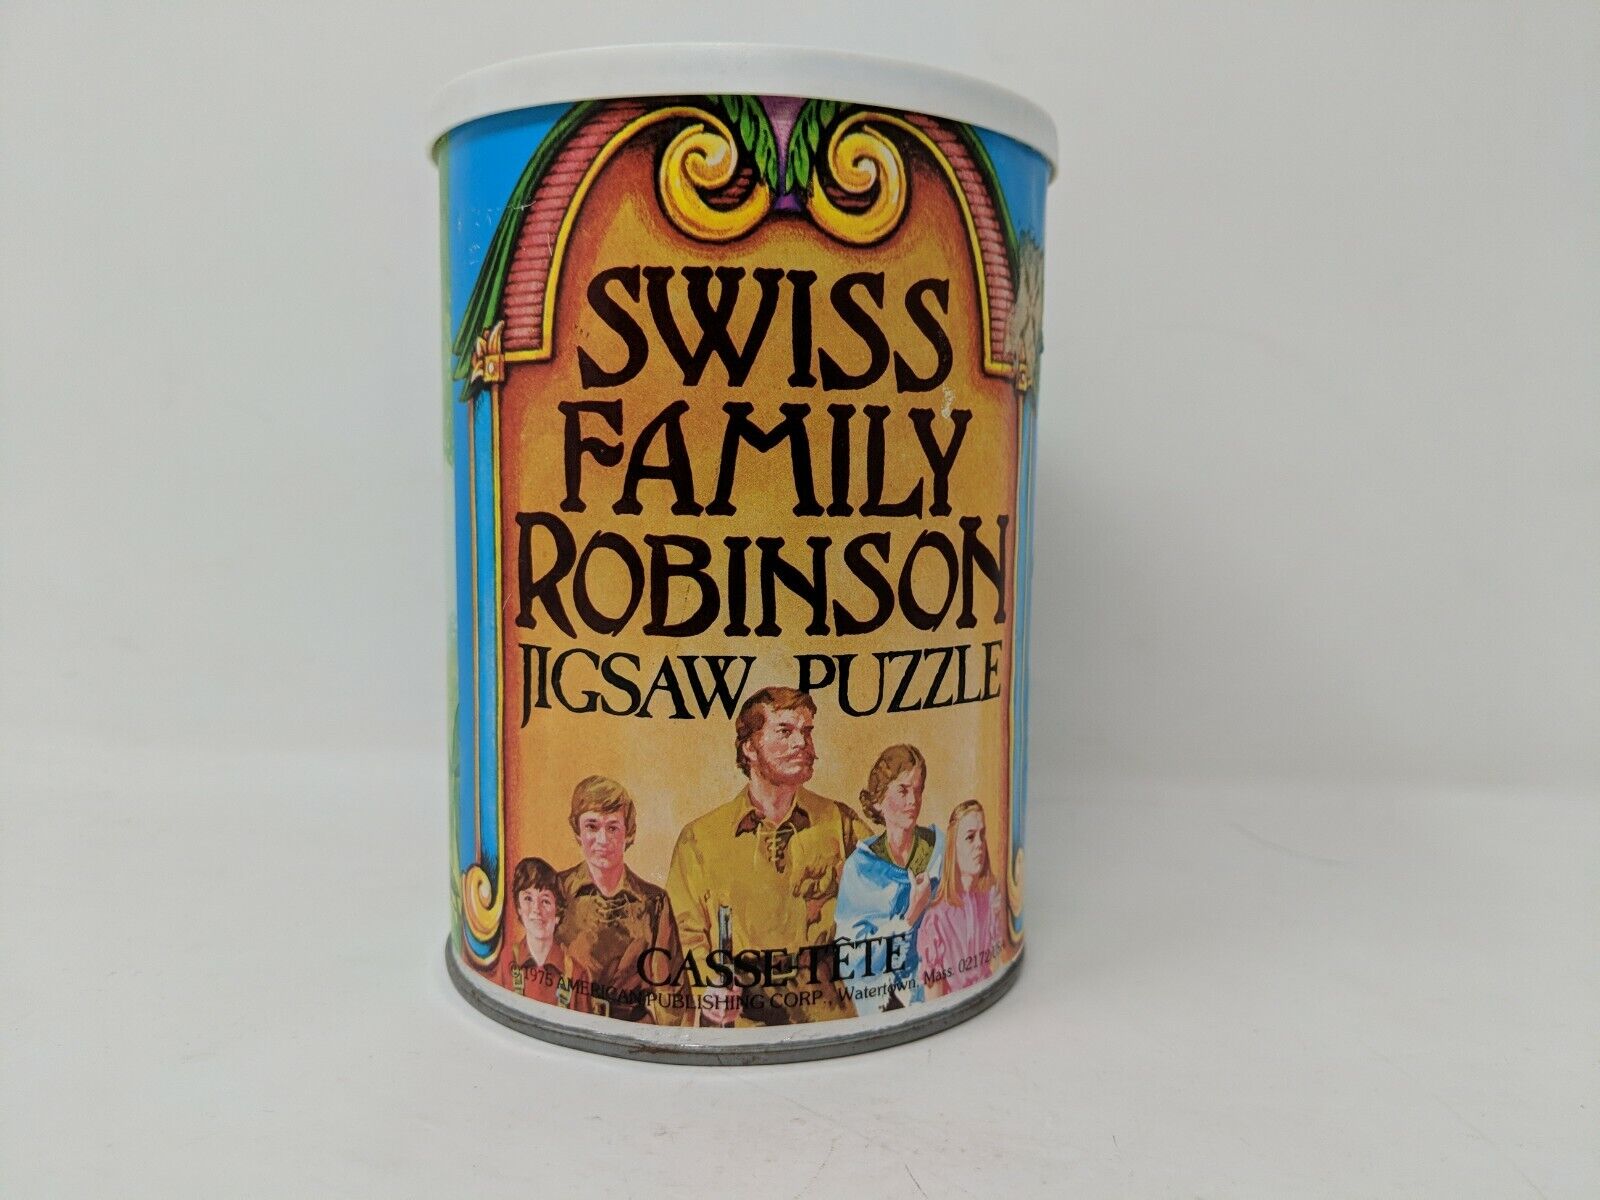 Swiss Family Robinson Jigsaw Puzzle Casse-tete Original Canist...